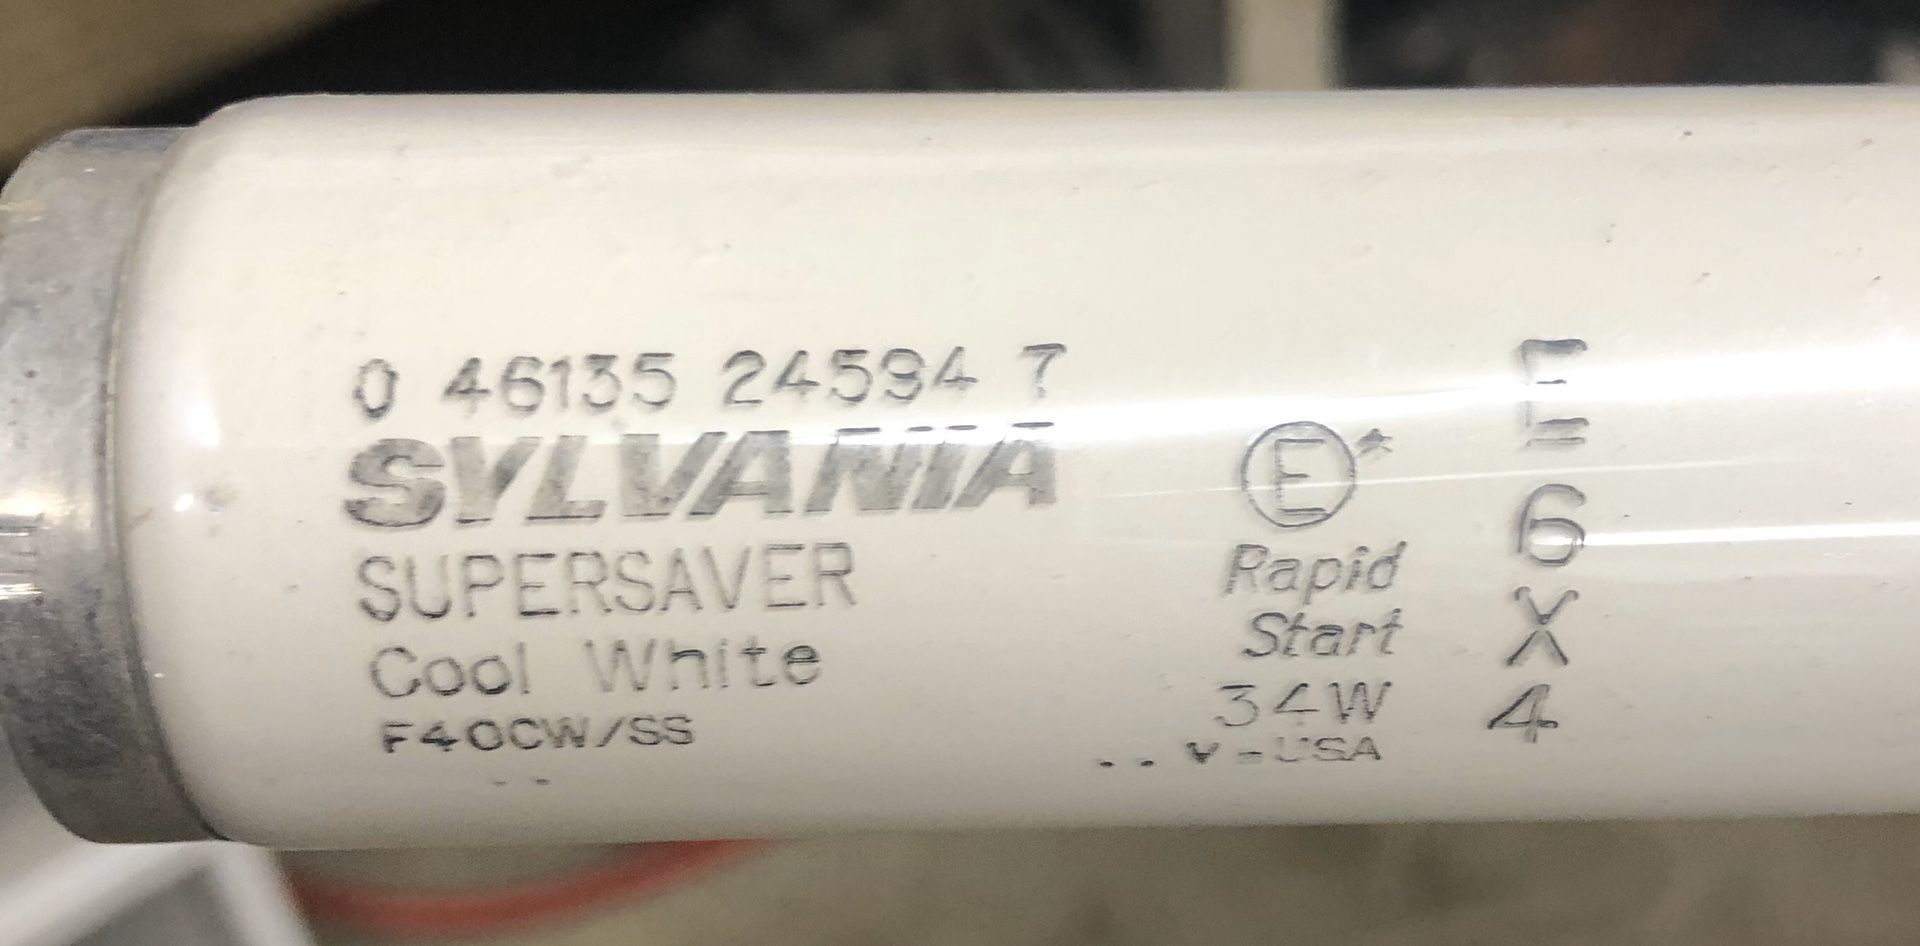 Sylvania Super Saver Cool White 34 watt—8 bulbs for sale